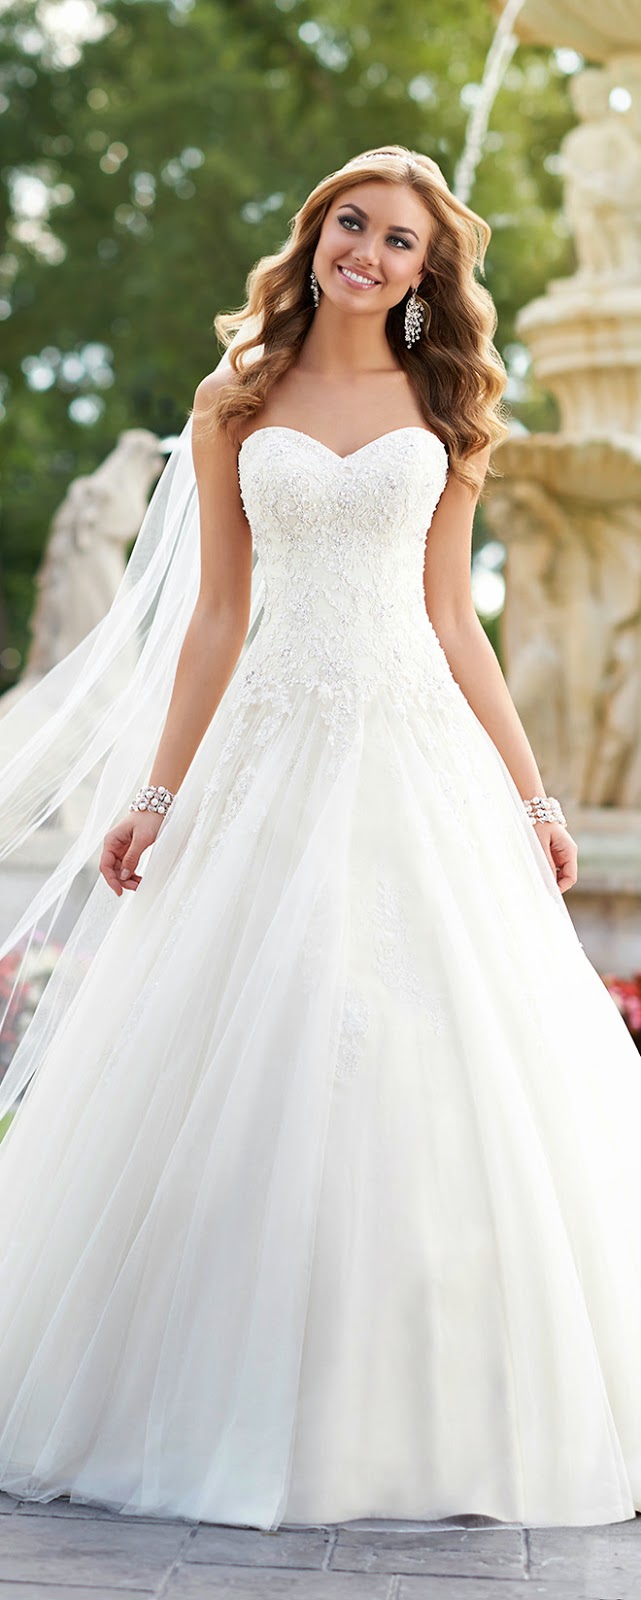 Best Wedding Dresses of 2014 - Stella York